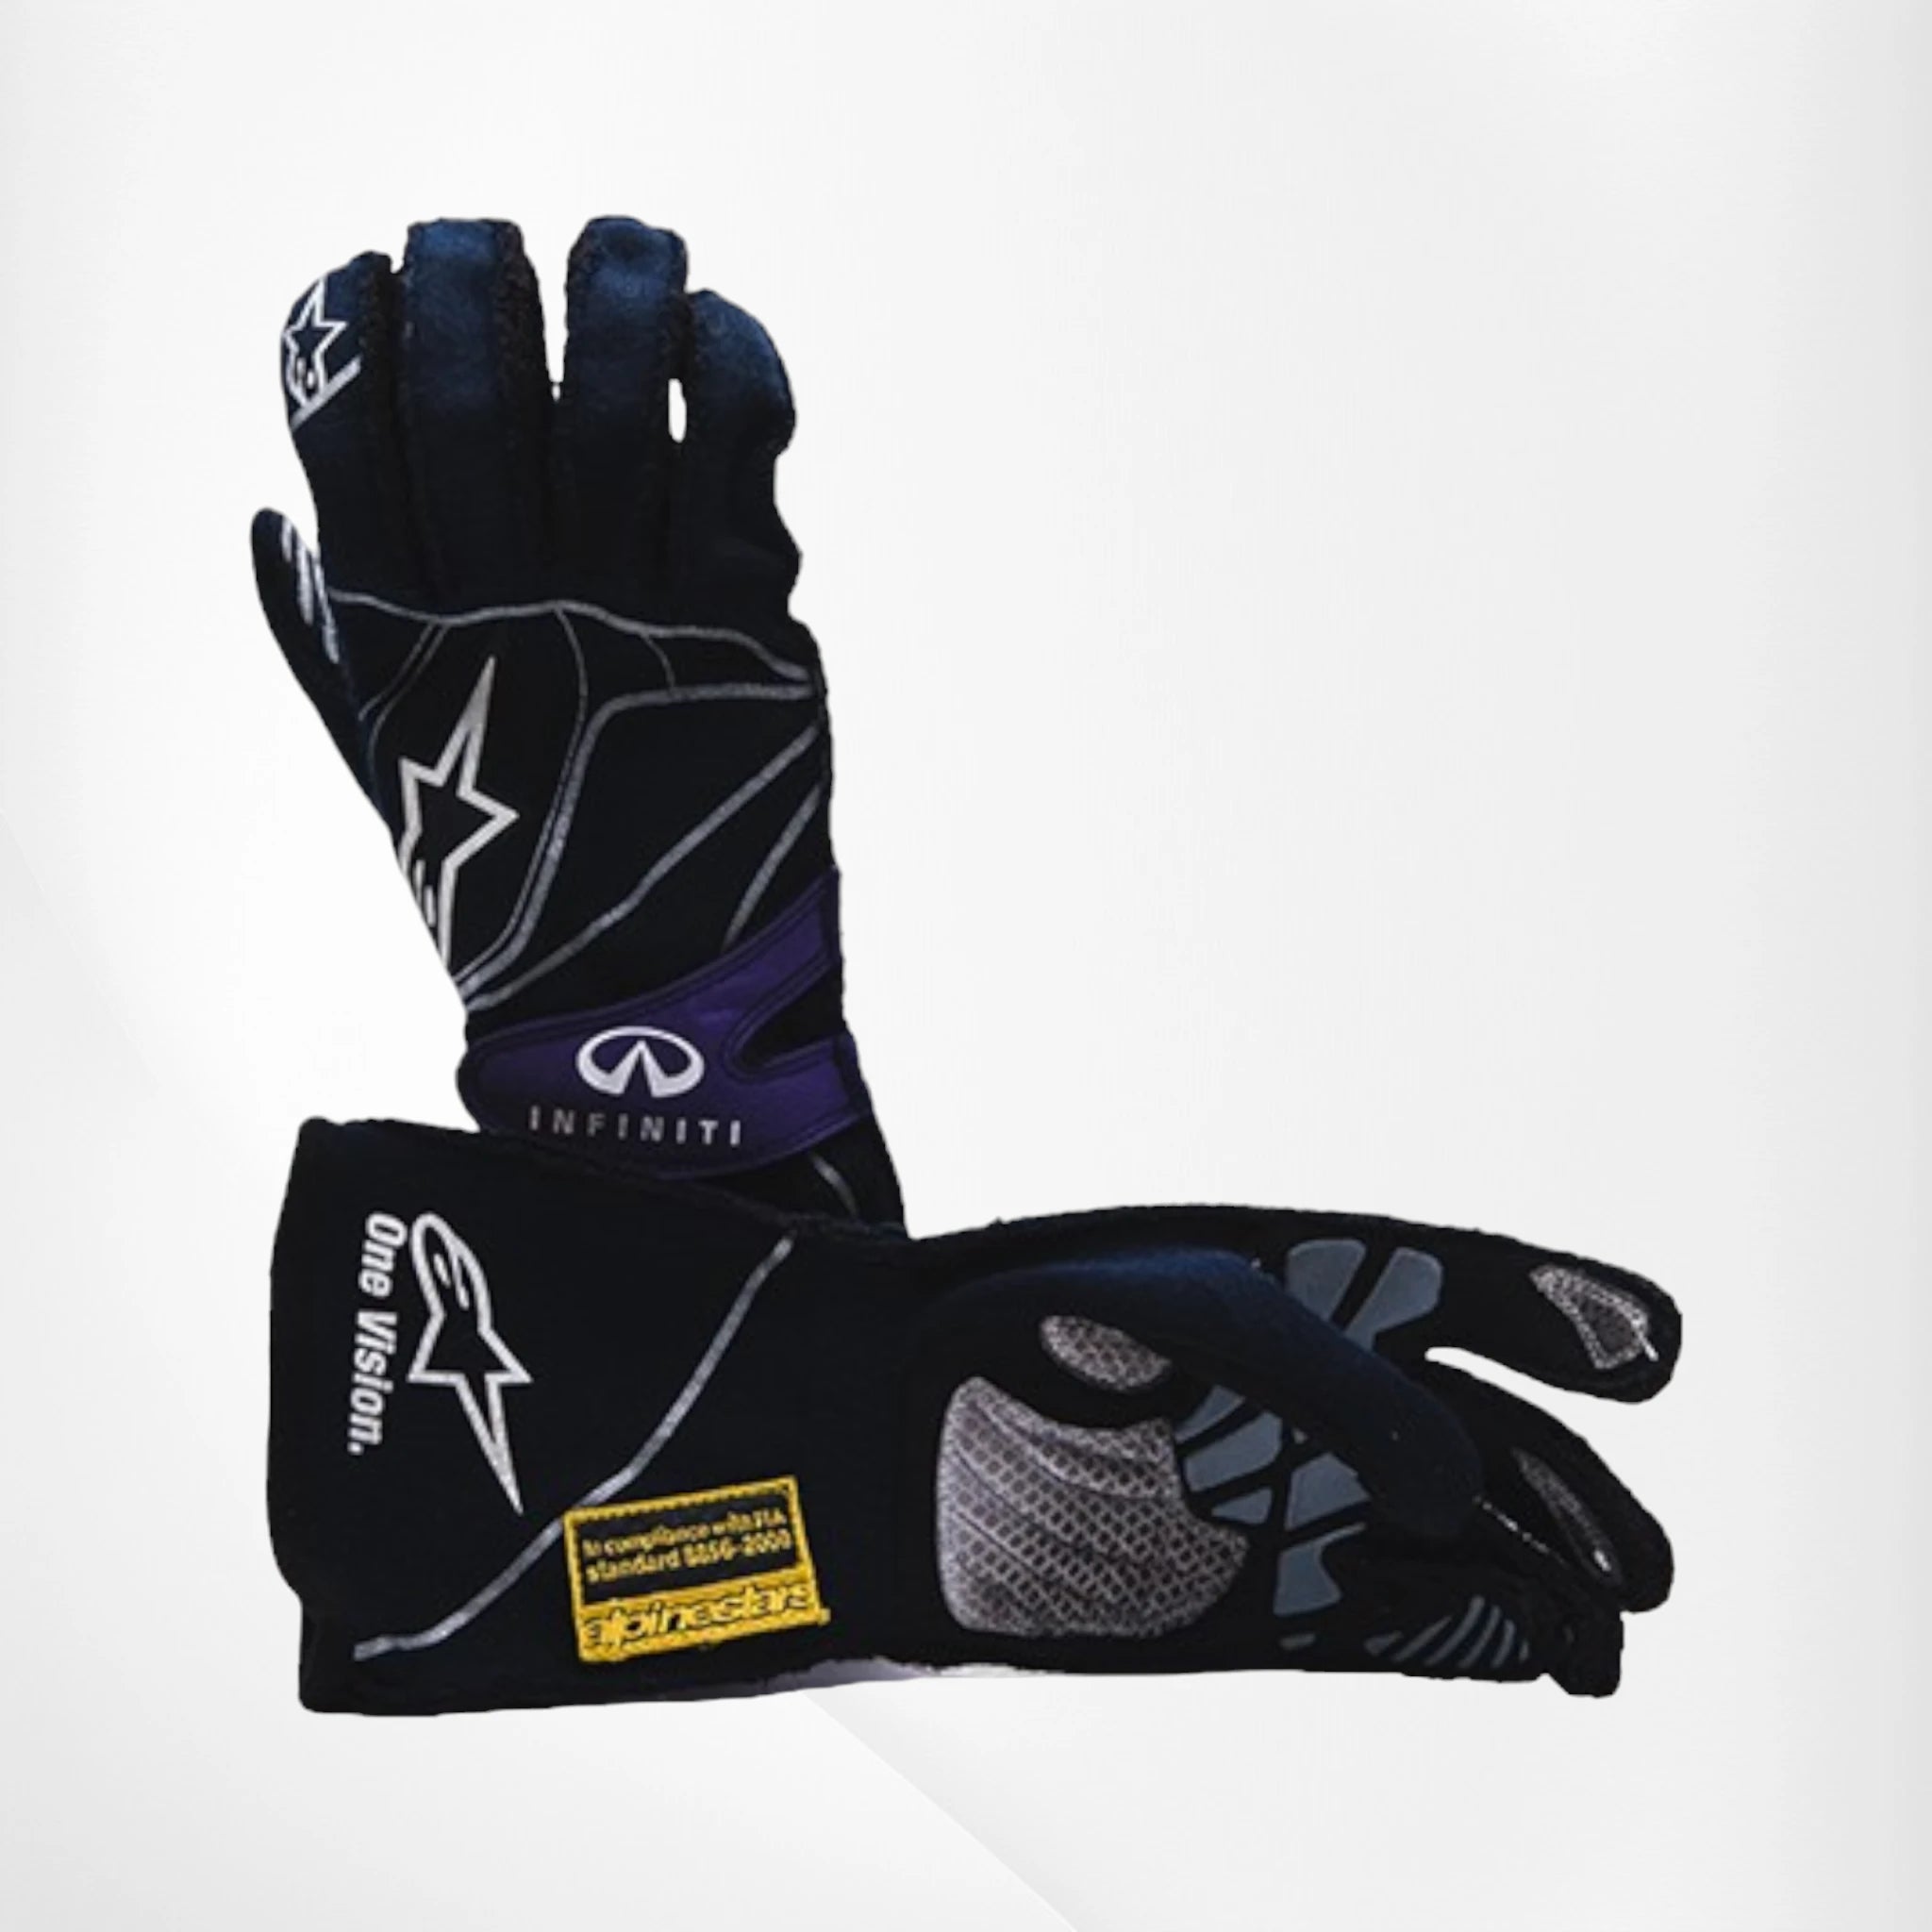 2015 Red Bull Daniel Ricciardo F1 Racing Gloves